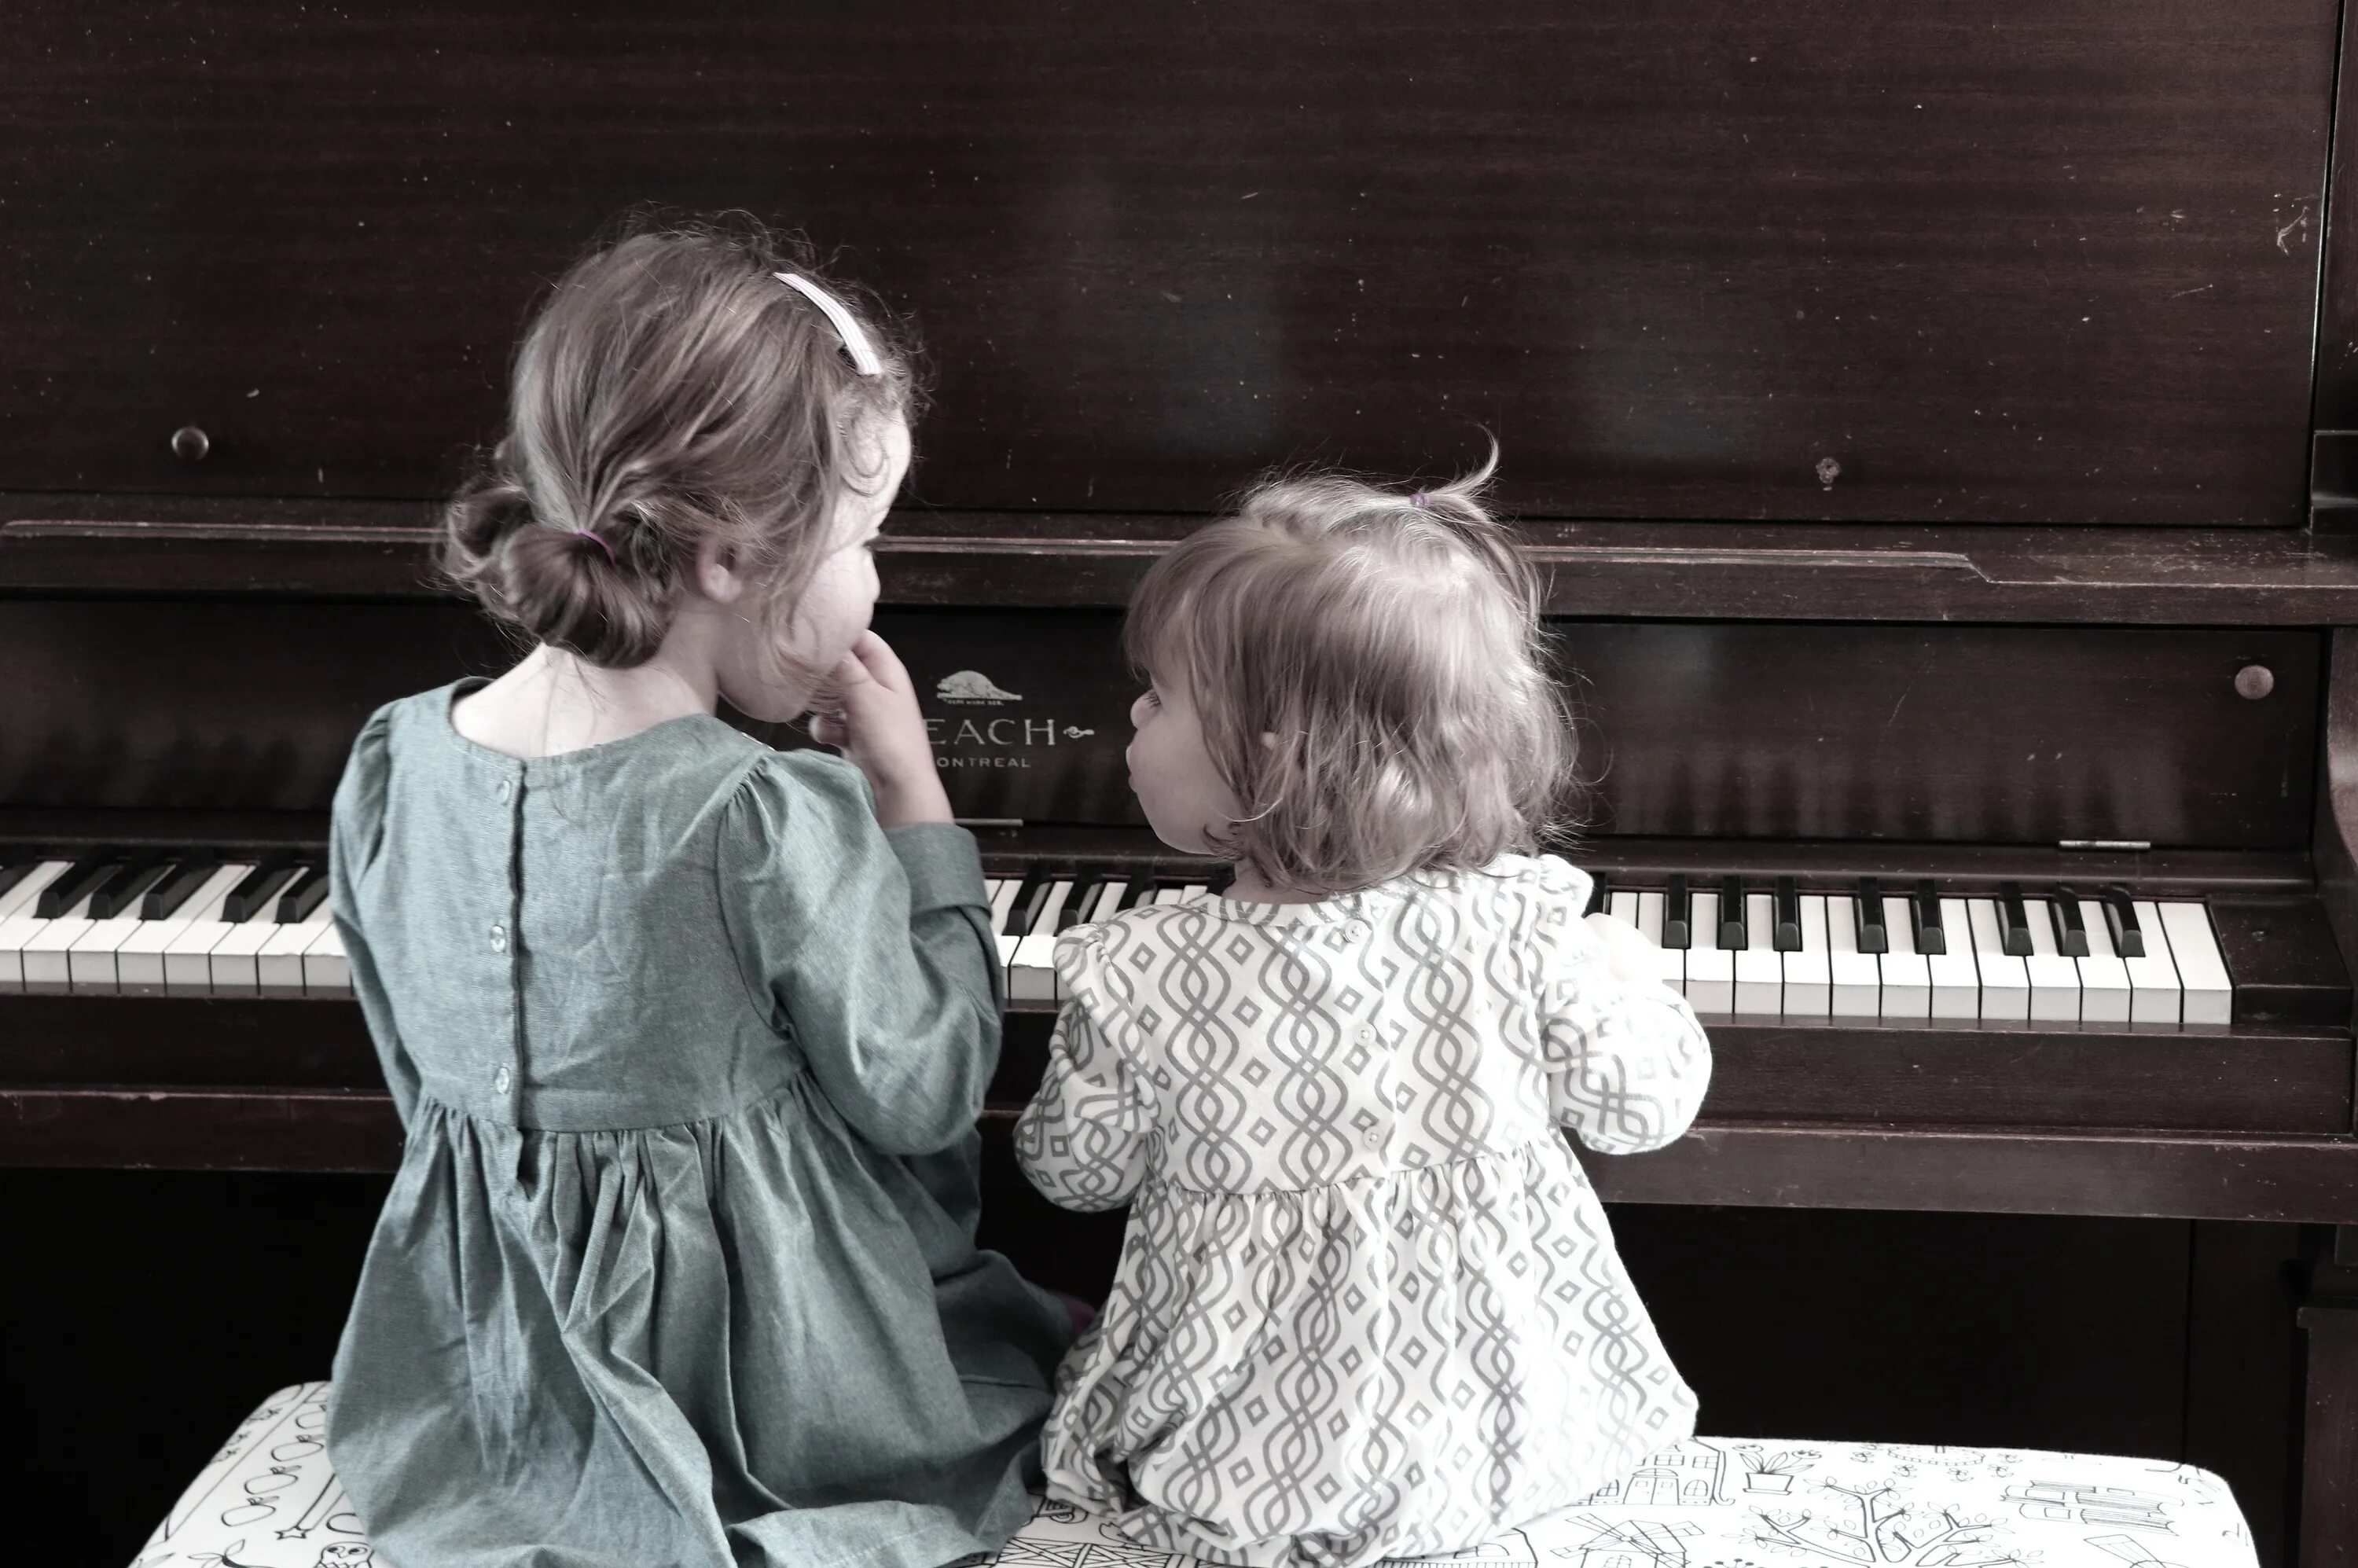 Малыш за роялем. Ребенок за роялем. Ребенок за фортепиано. Фортепиано для детей. I can playing the piano